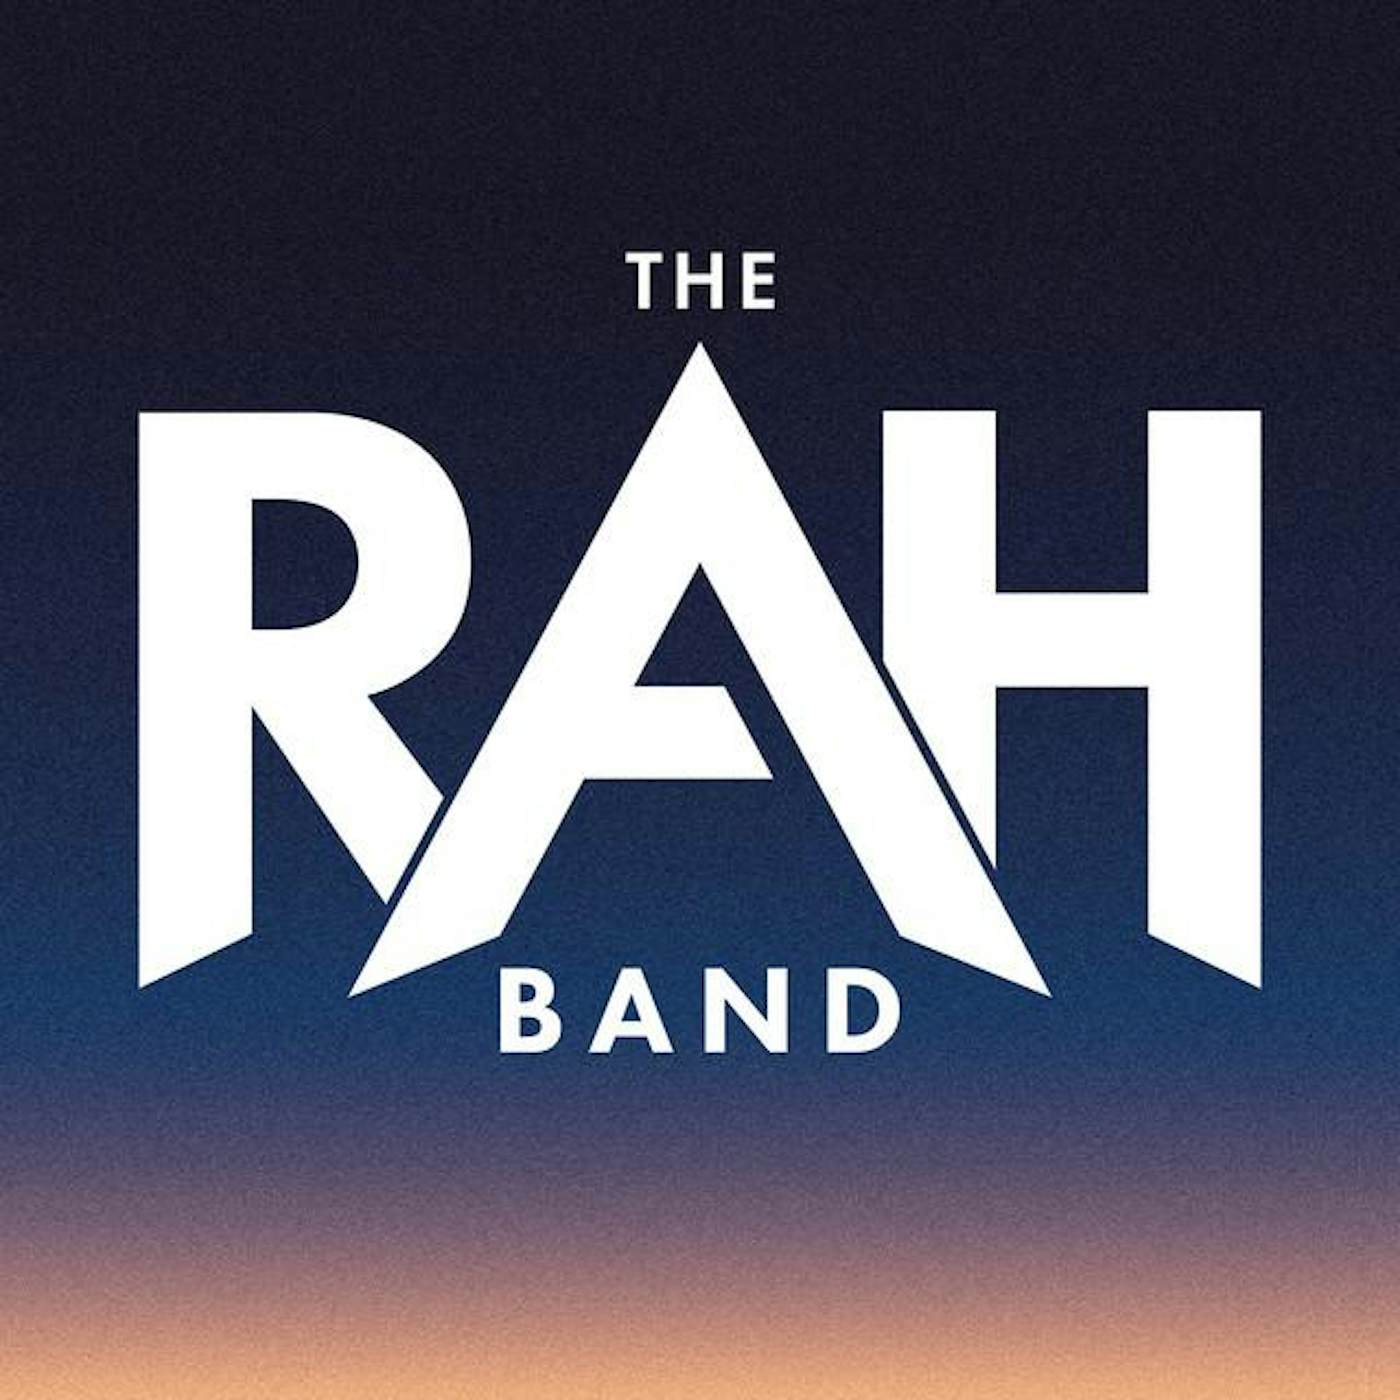 The Rah Band